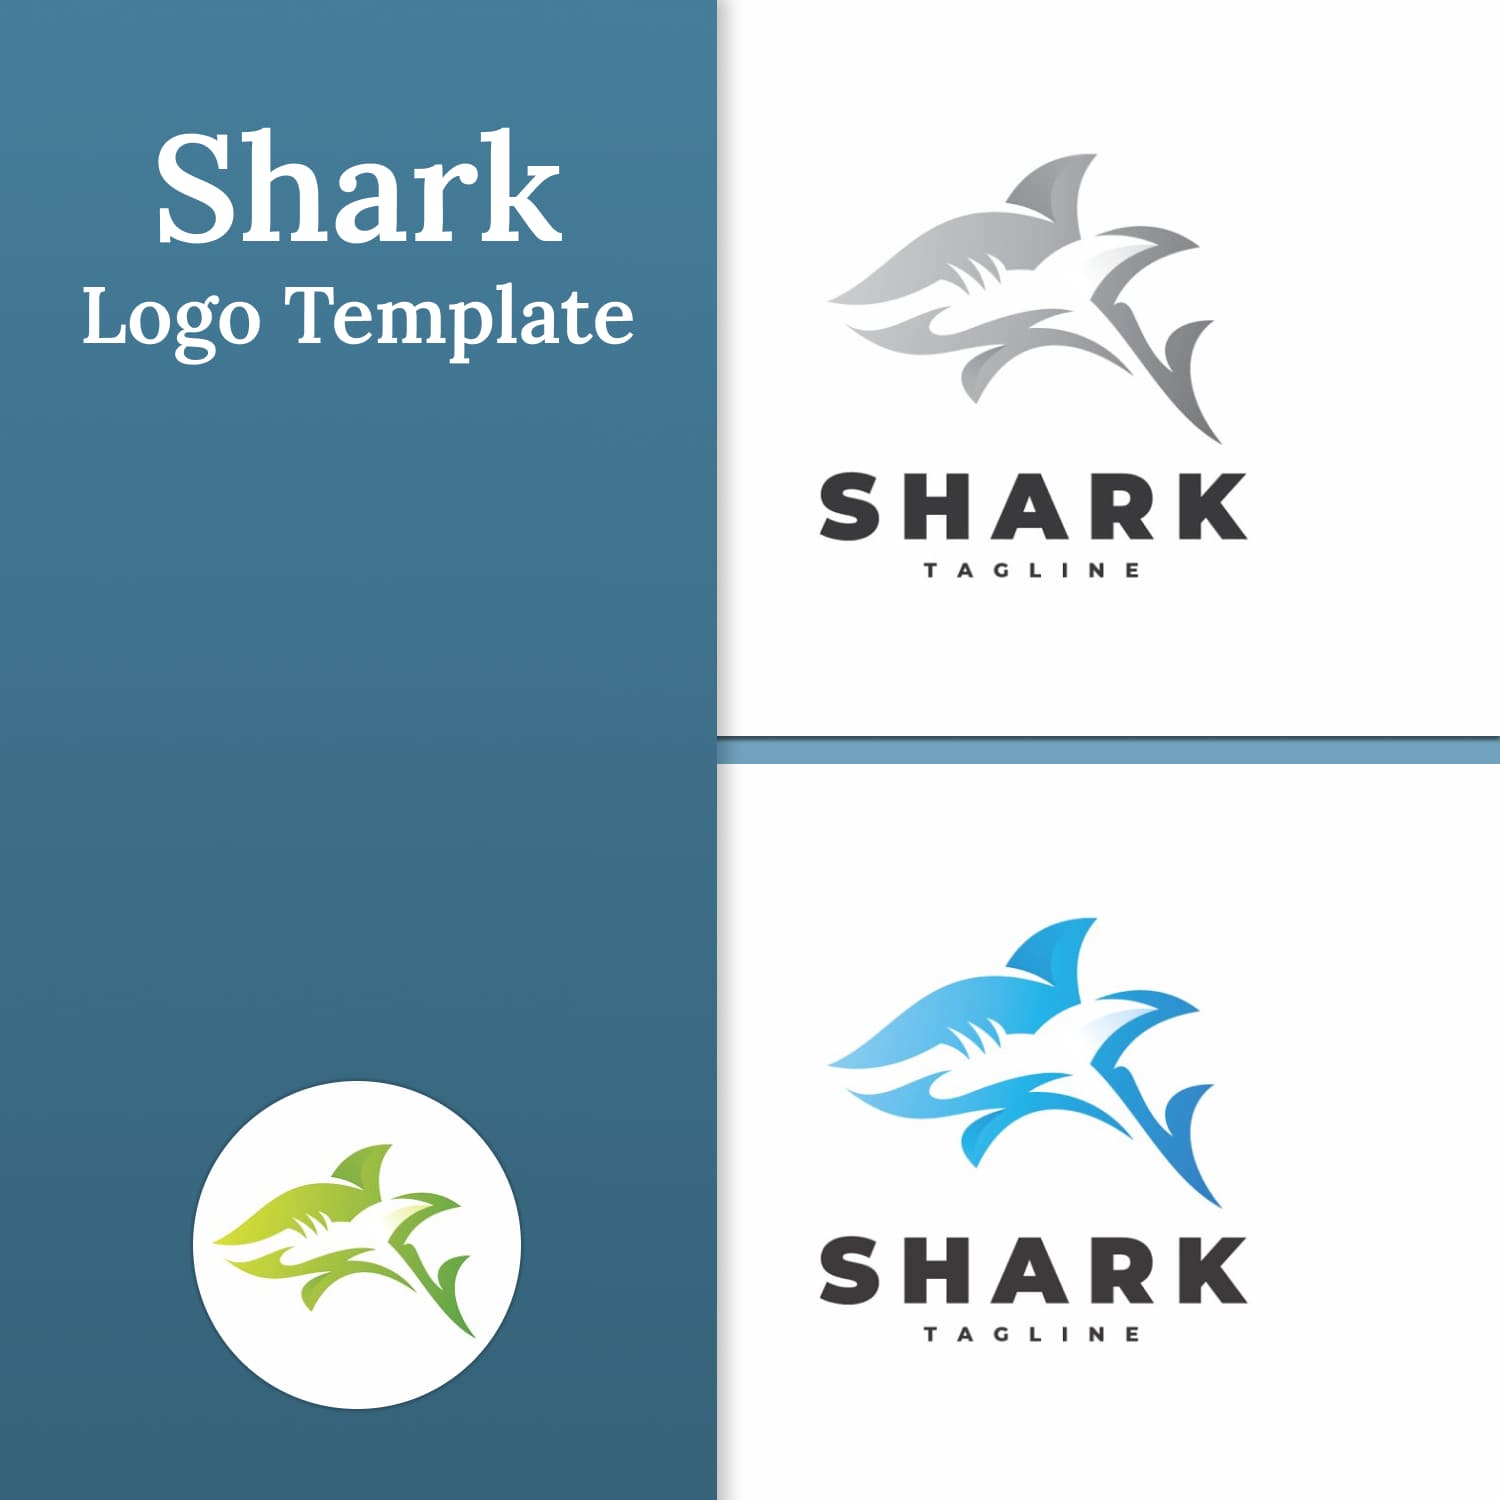 Shark logo template - main image preview.